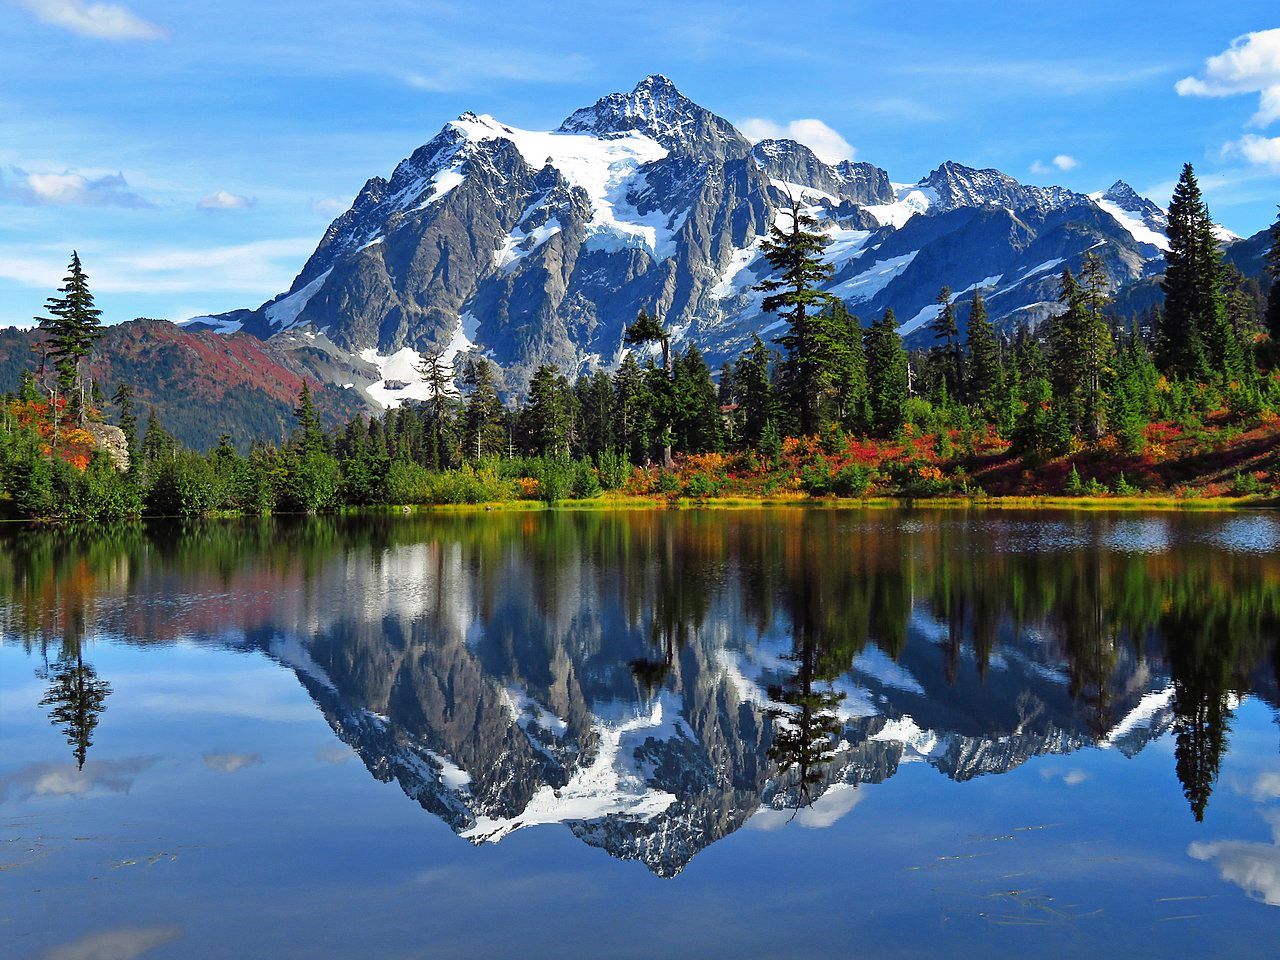 Scenery in North Cascades National Park, Washington